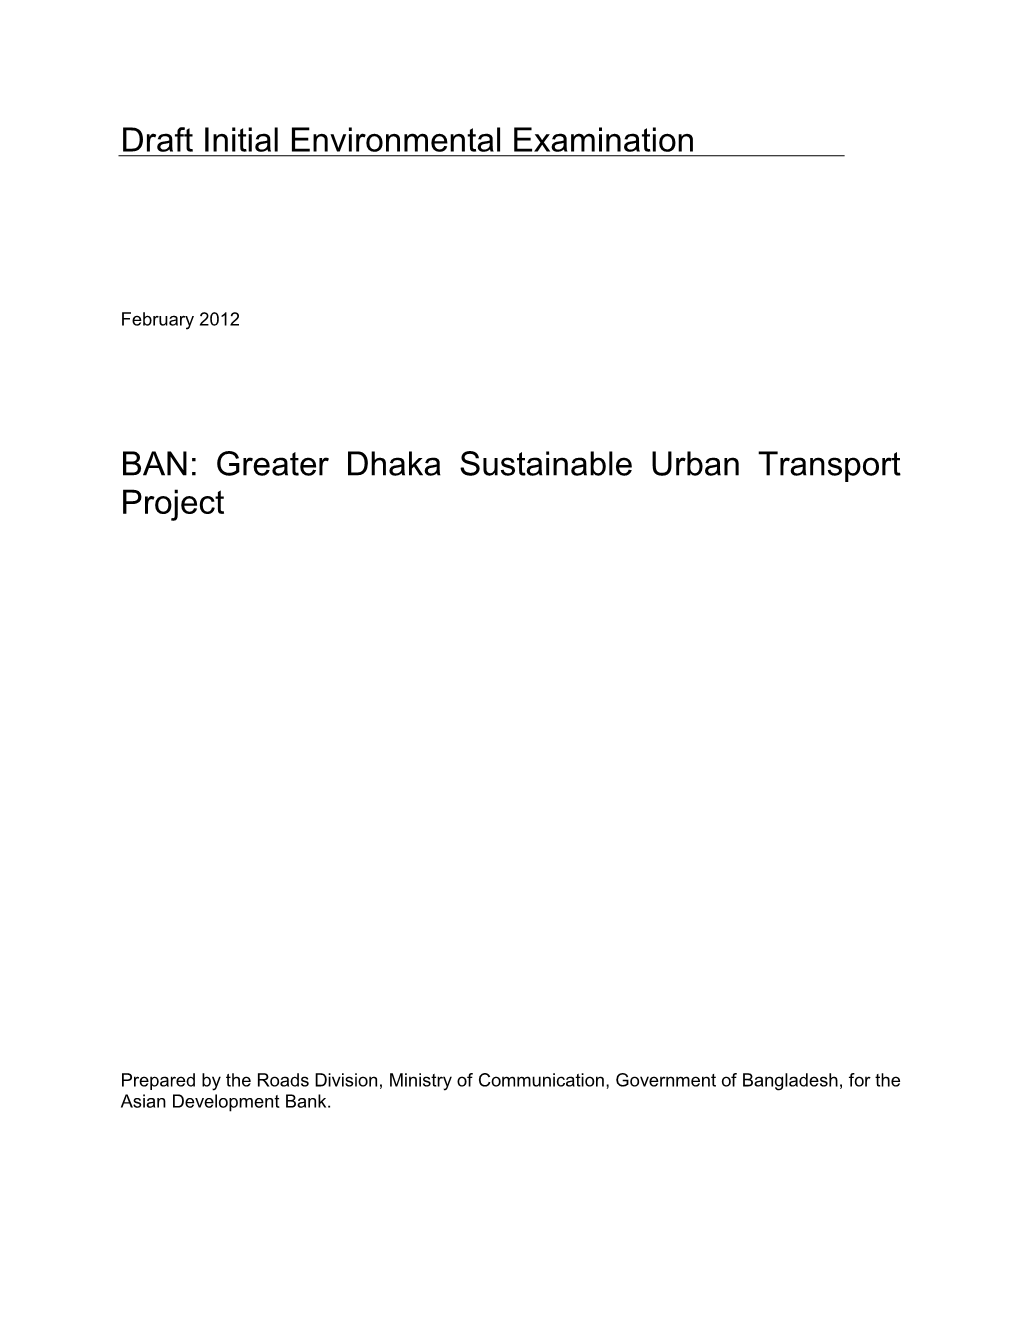 Draft IEE: Bangladesh: Greater Dhaka Sustainable Urban Transport Project